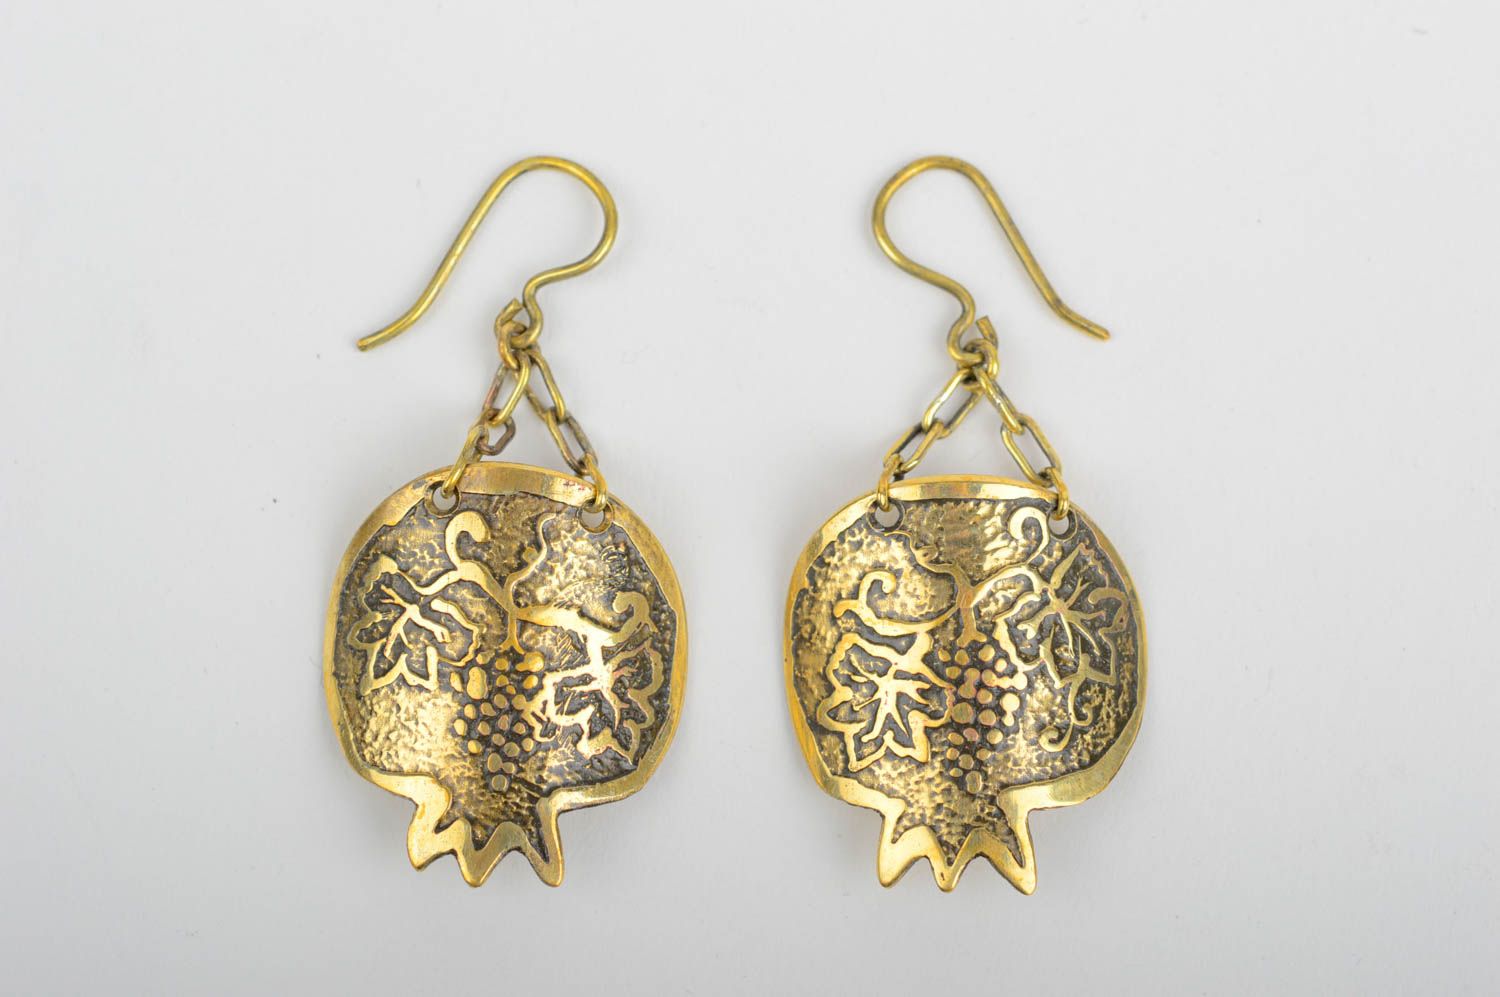 Handmade brass earrings vintage accessories for women brass stylish jewelry photo 1